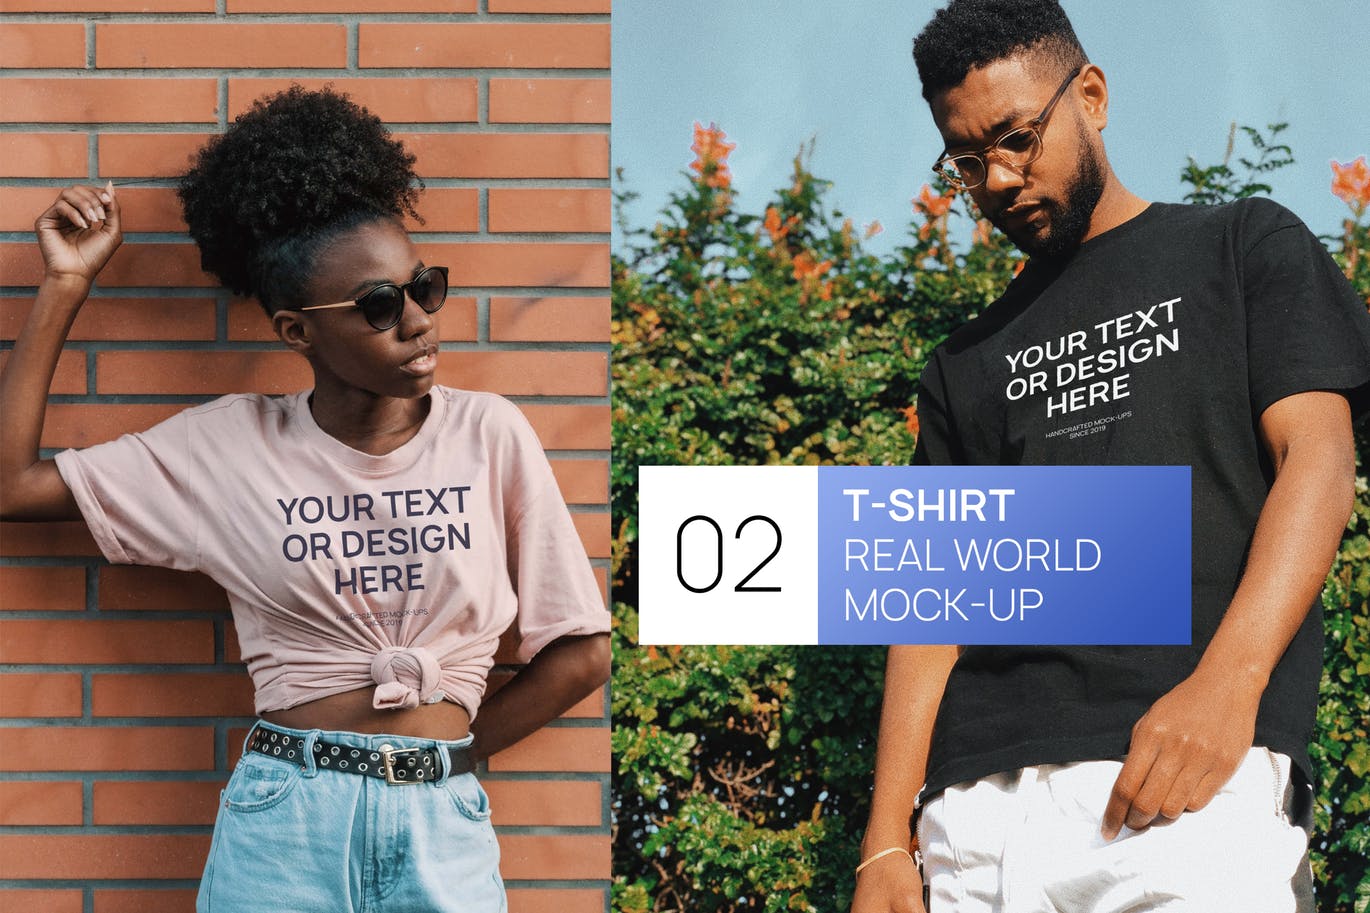 经典情侣黑白T恤印花图样机蚂蚁素材精选模板 Two Black Persons T-Shirt Real World Photo Mock-up插图